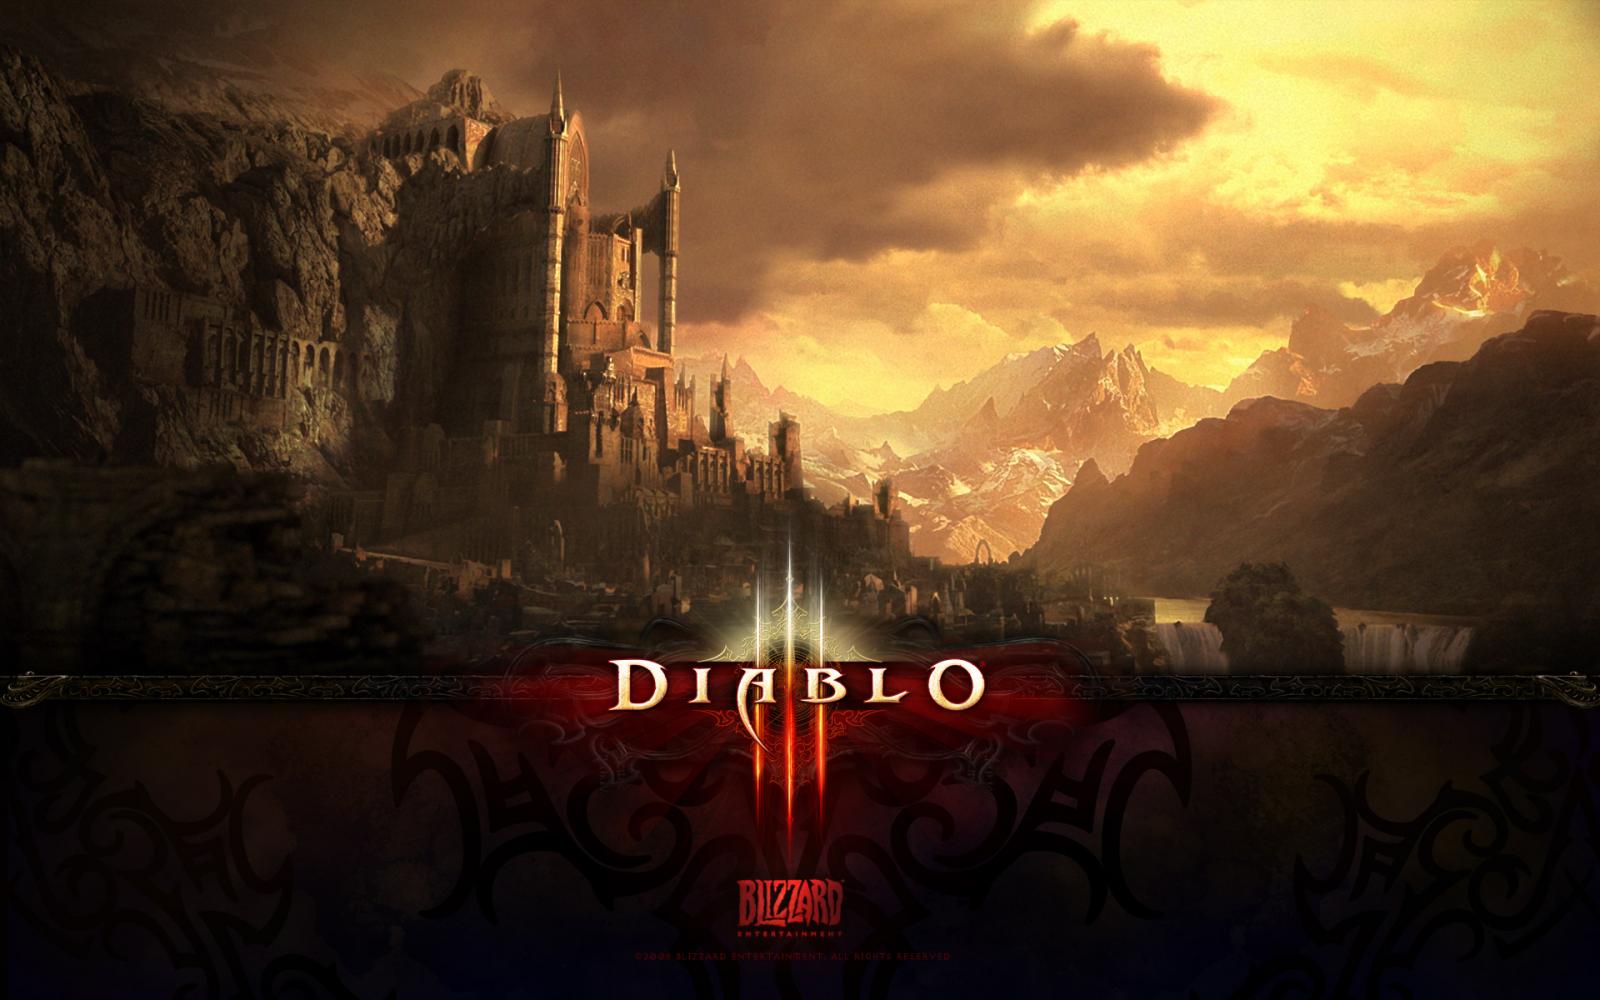 Wallpaper Jeux video Diablo 3 UREH